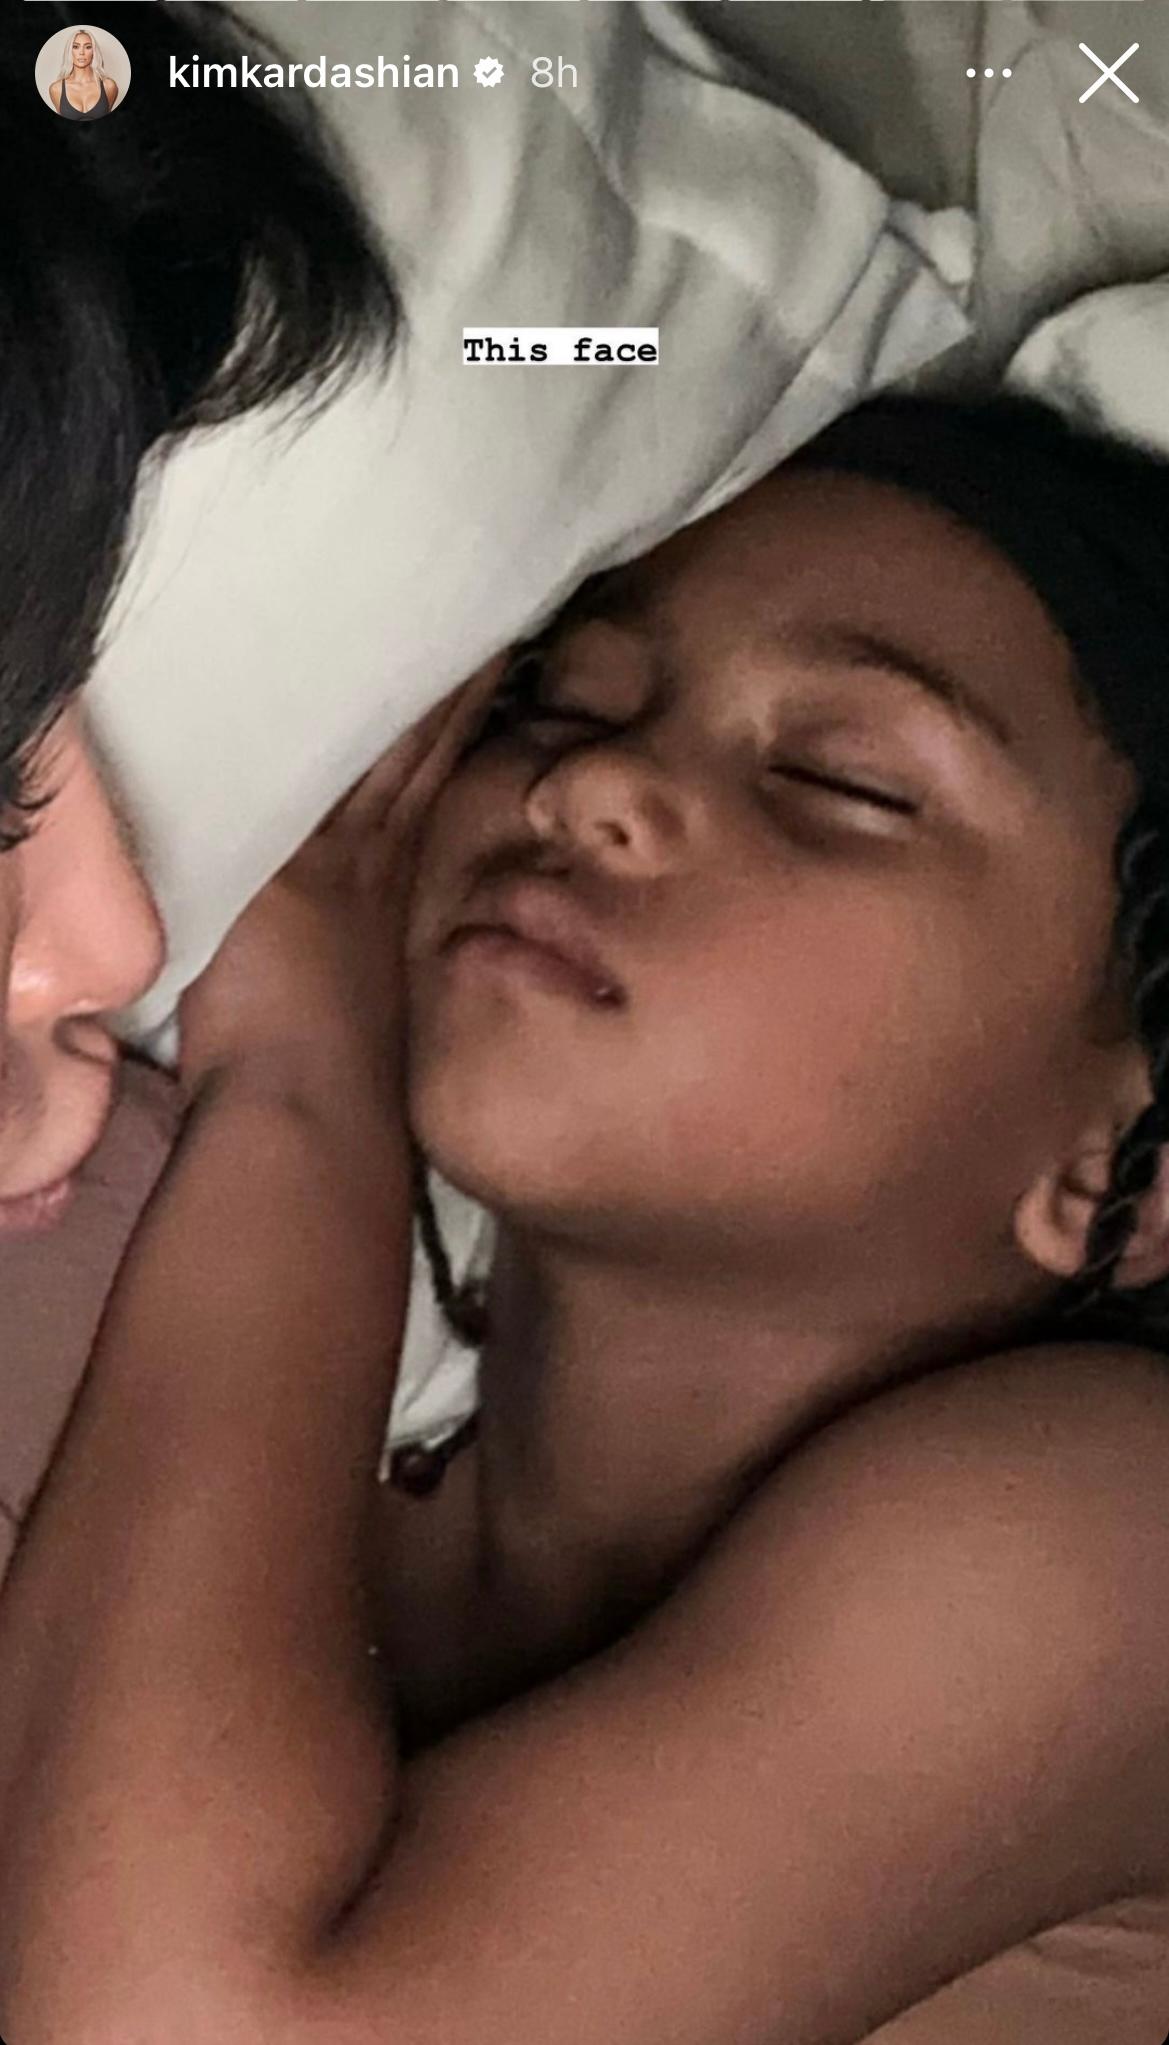 Kim Kardashian and son Saint sleeping in bed